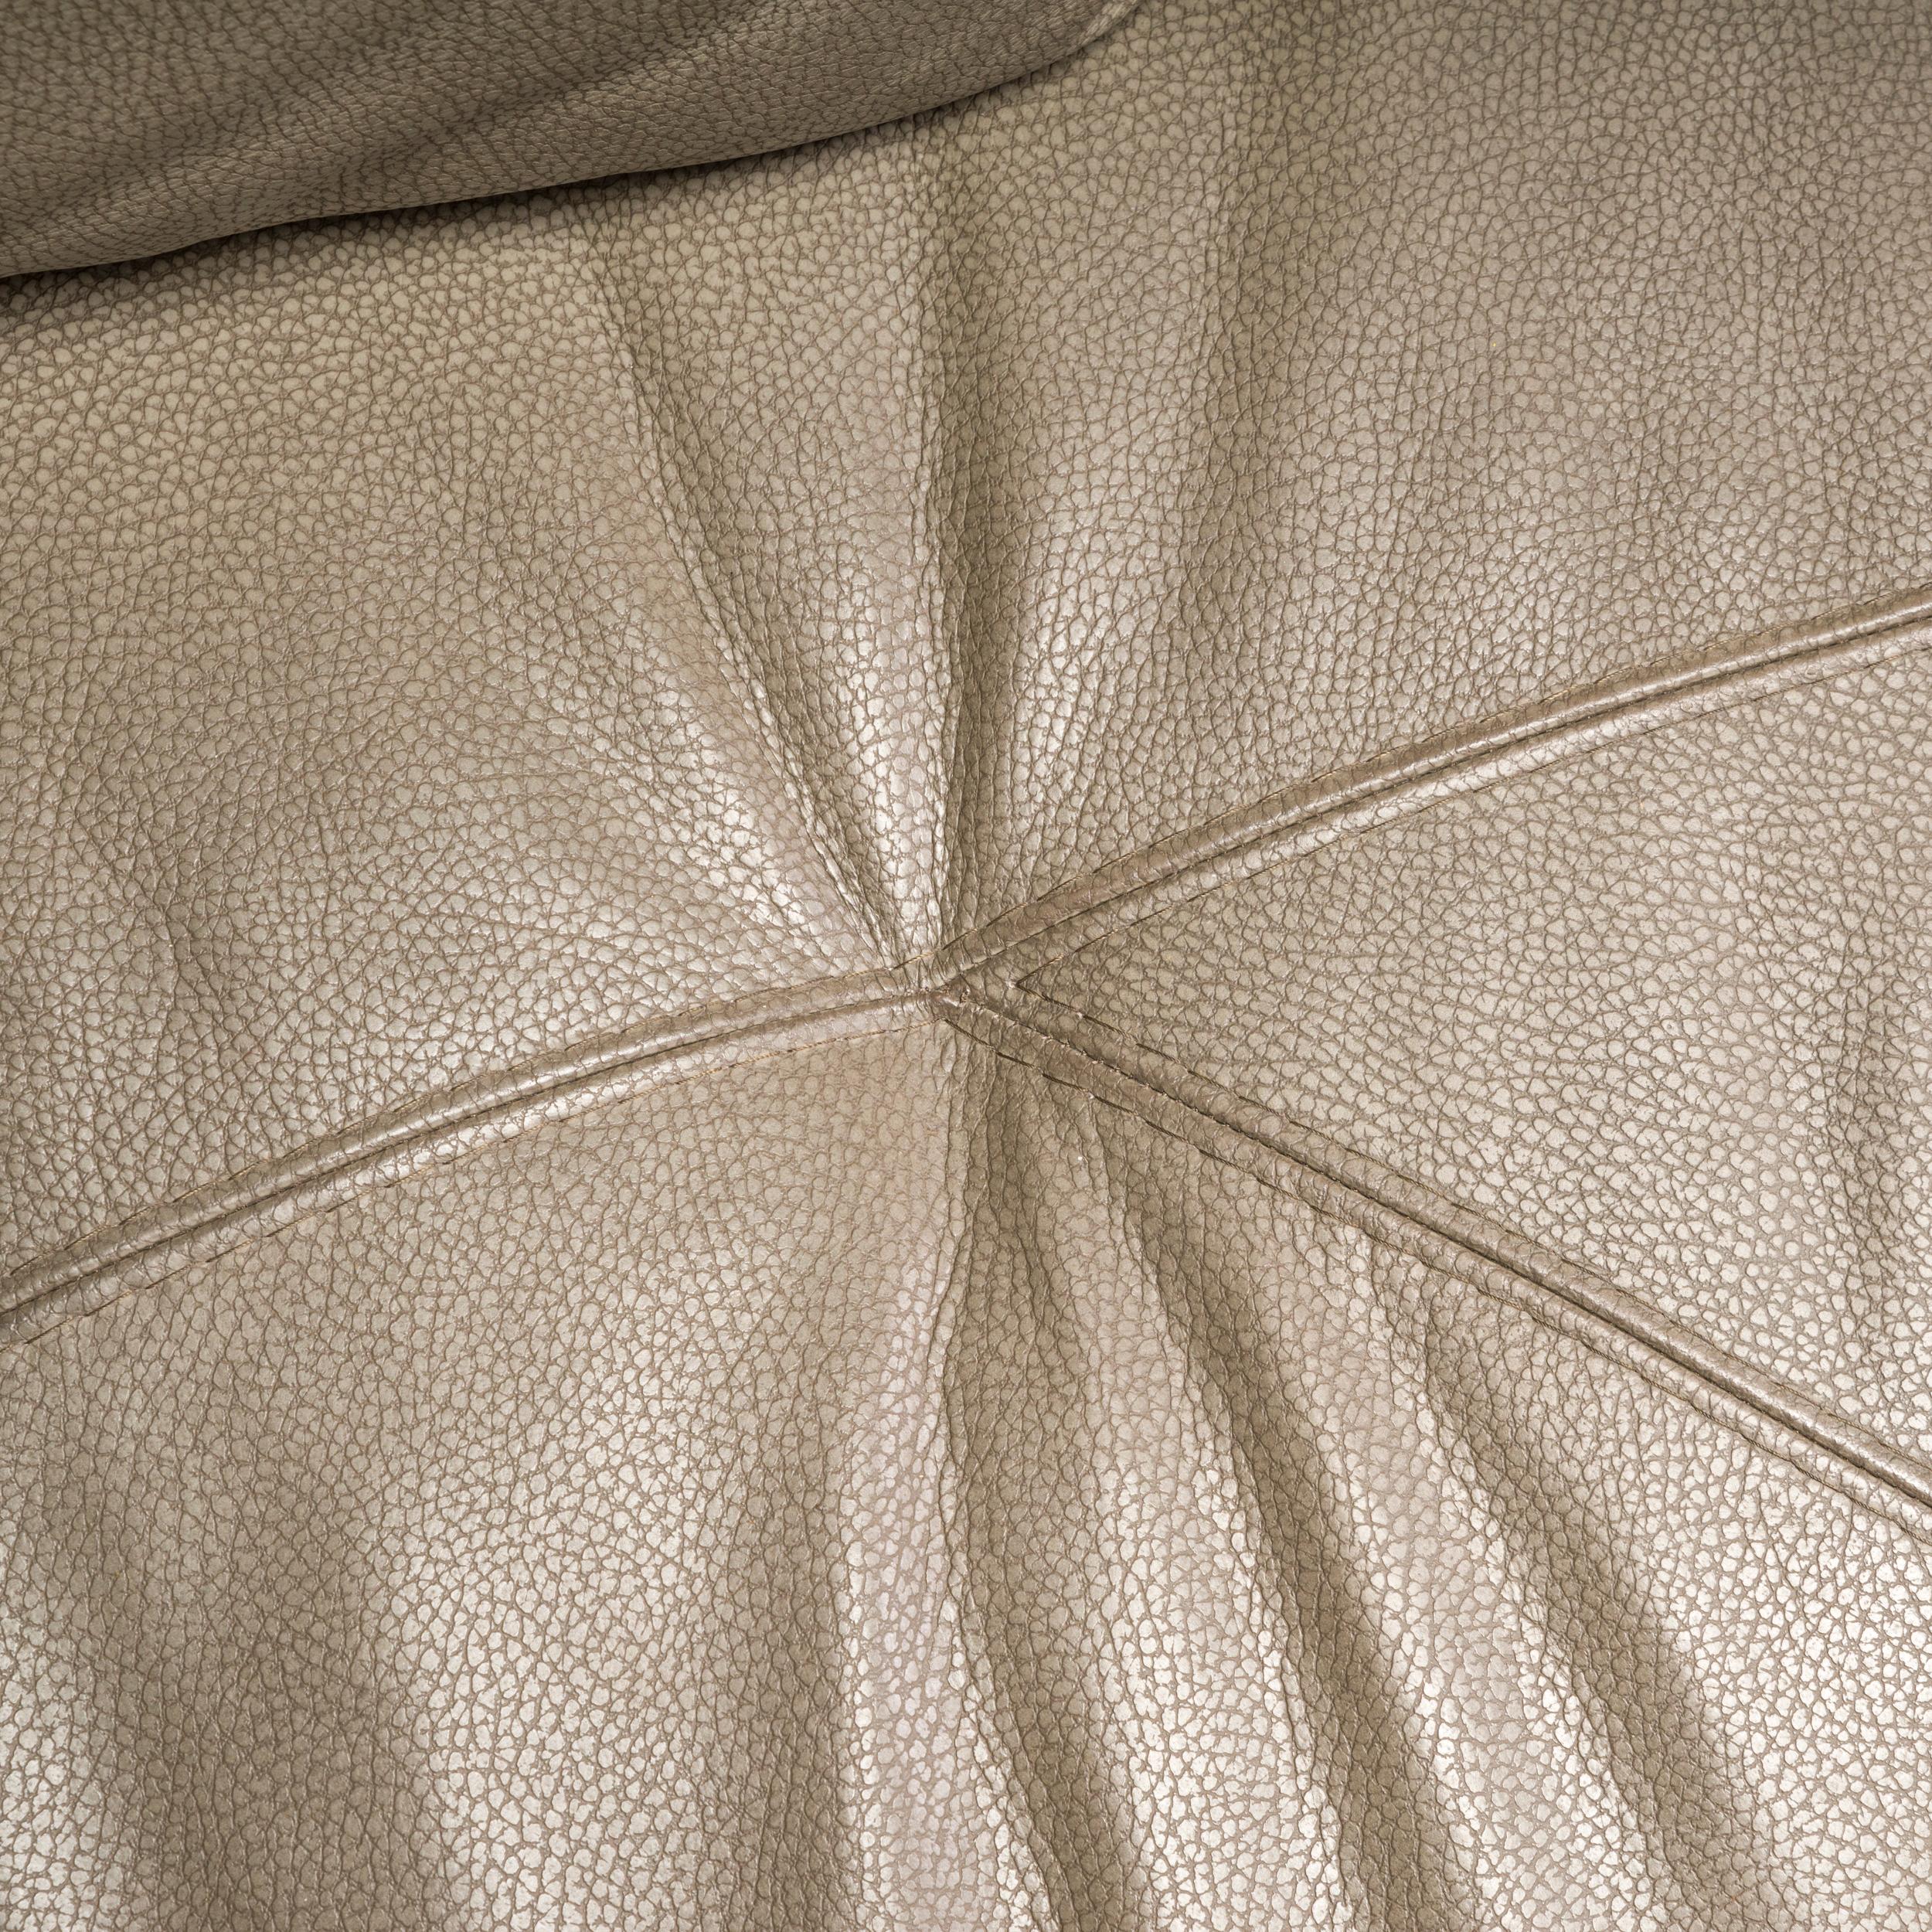 Roche Bobois by Gabriele Assmann & Alfred Kleene Leather Digital Curved Sofa For Sale 1